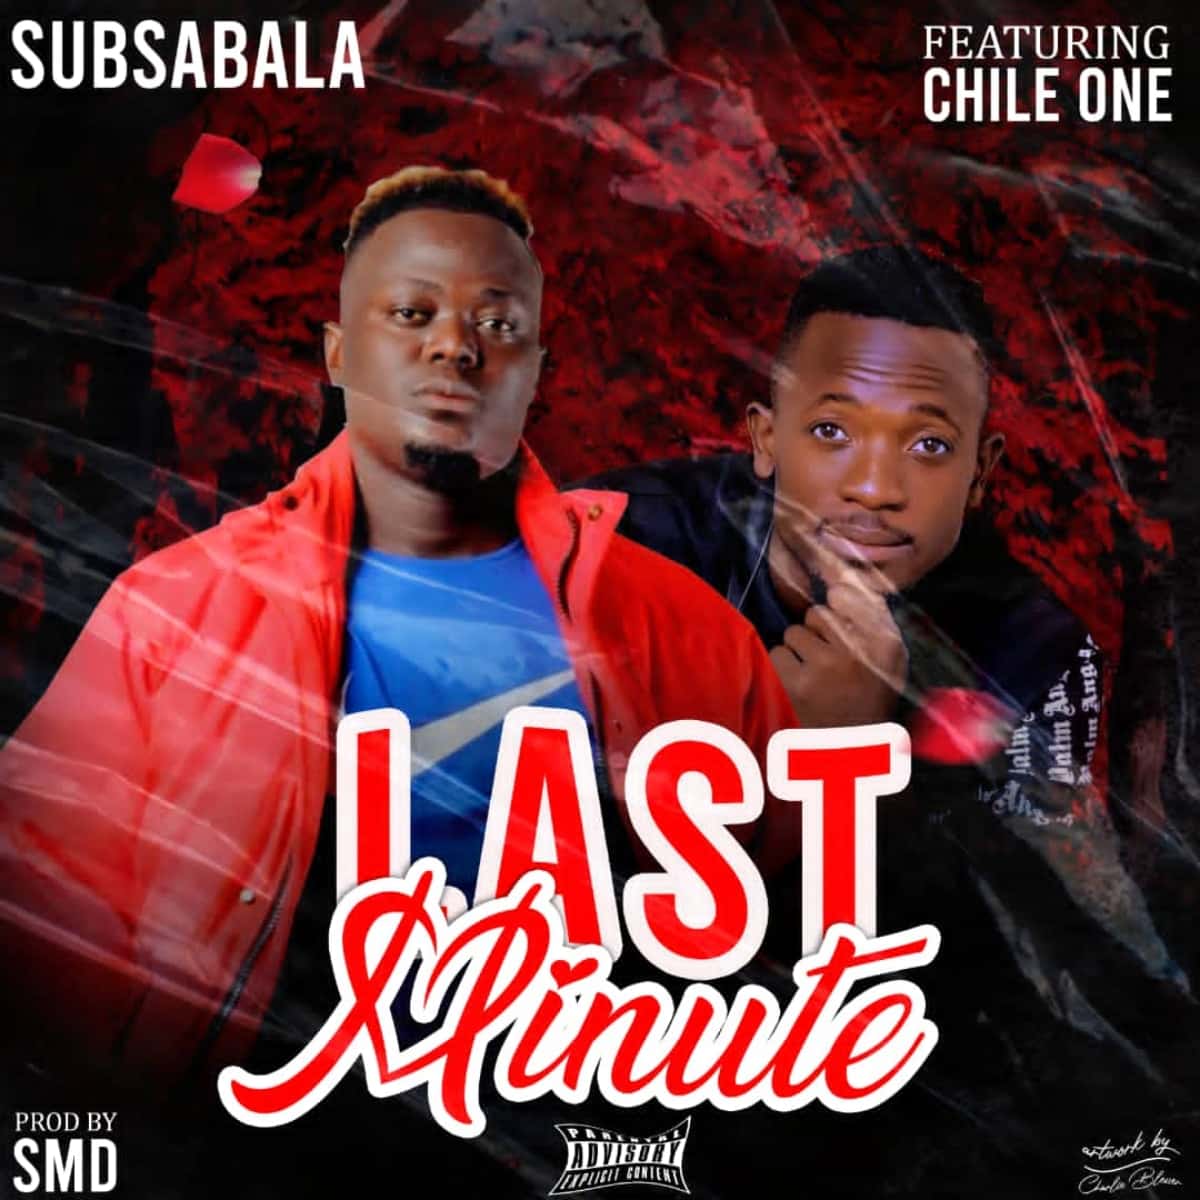 DOWNLOAD: Sub Sabala Ft Chile One Mr Zambia – “Last Minutes” Mp3